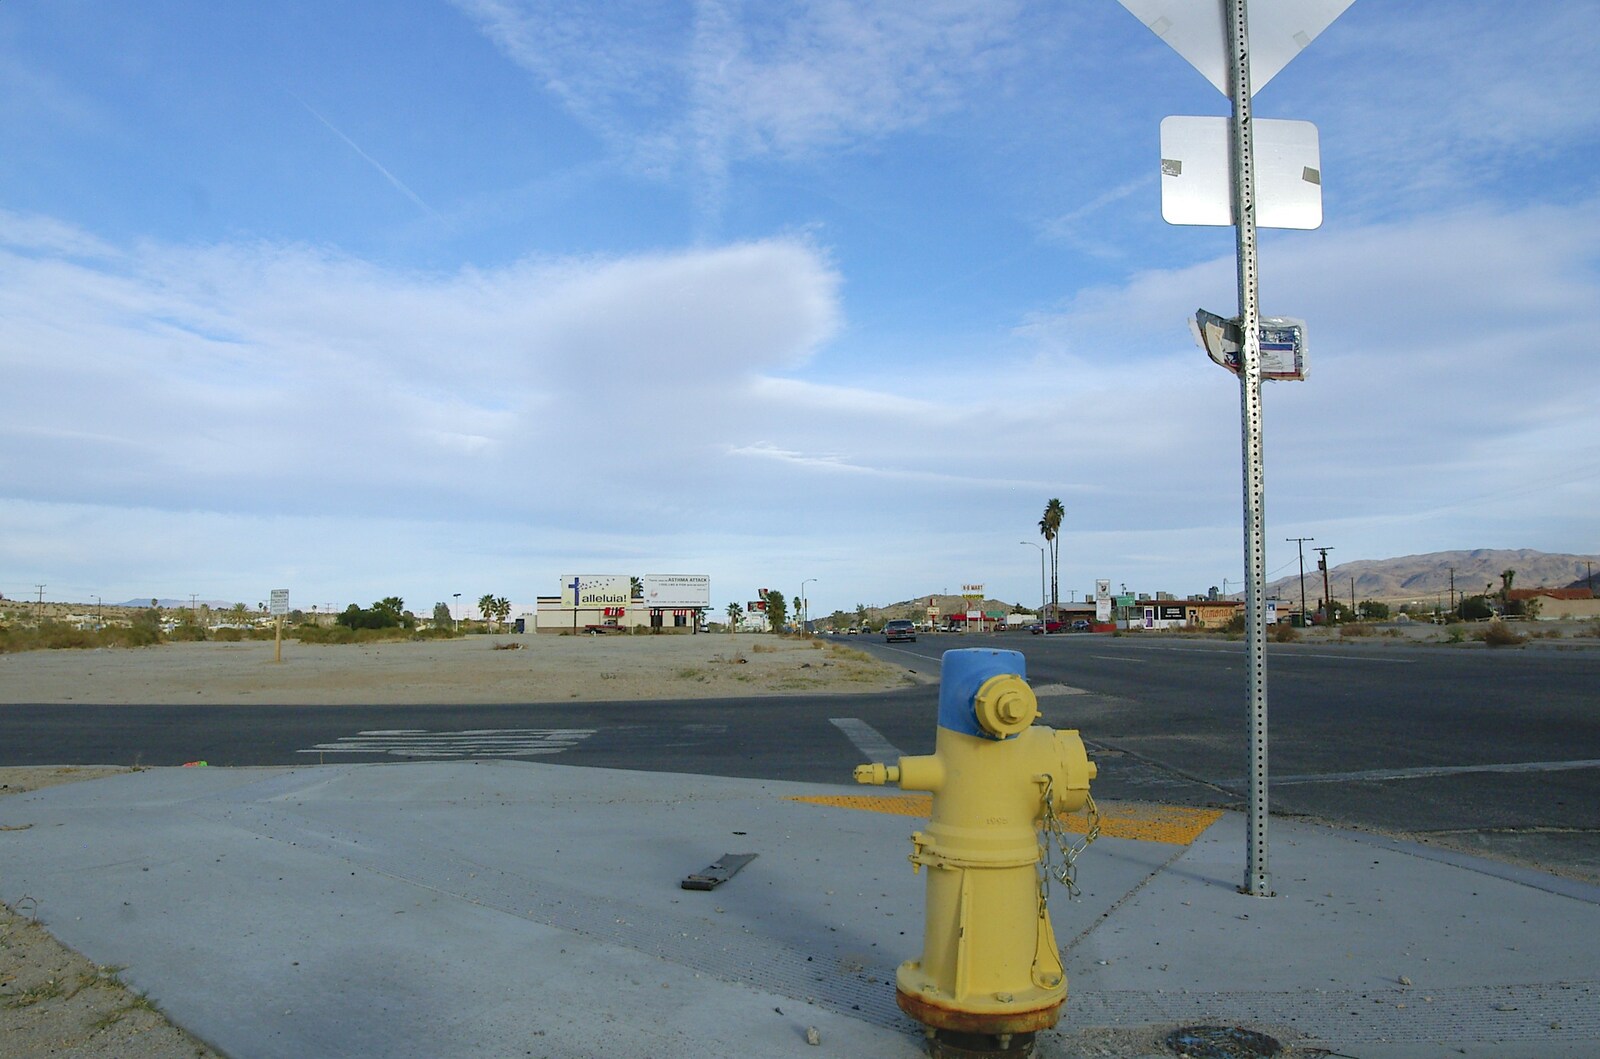 A random fire hydrant from Mojave Desert: San Diego to Joshua Tree and Twentynine Palms, California, US - 5th March 2006